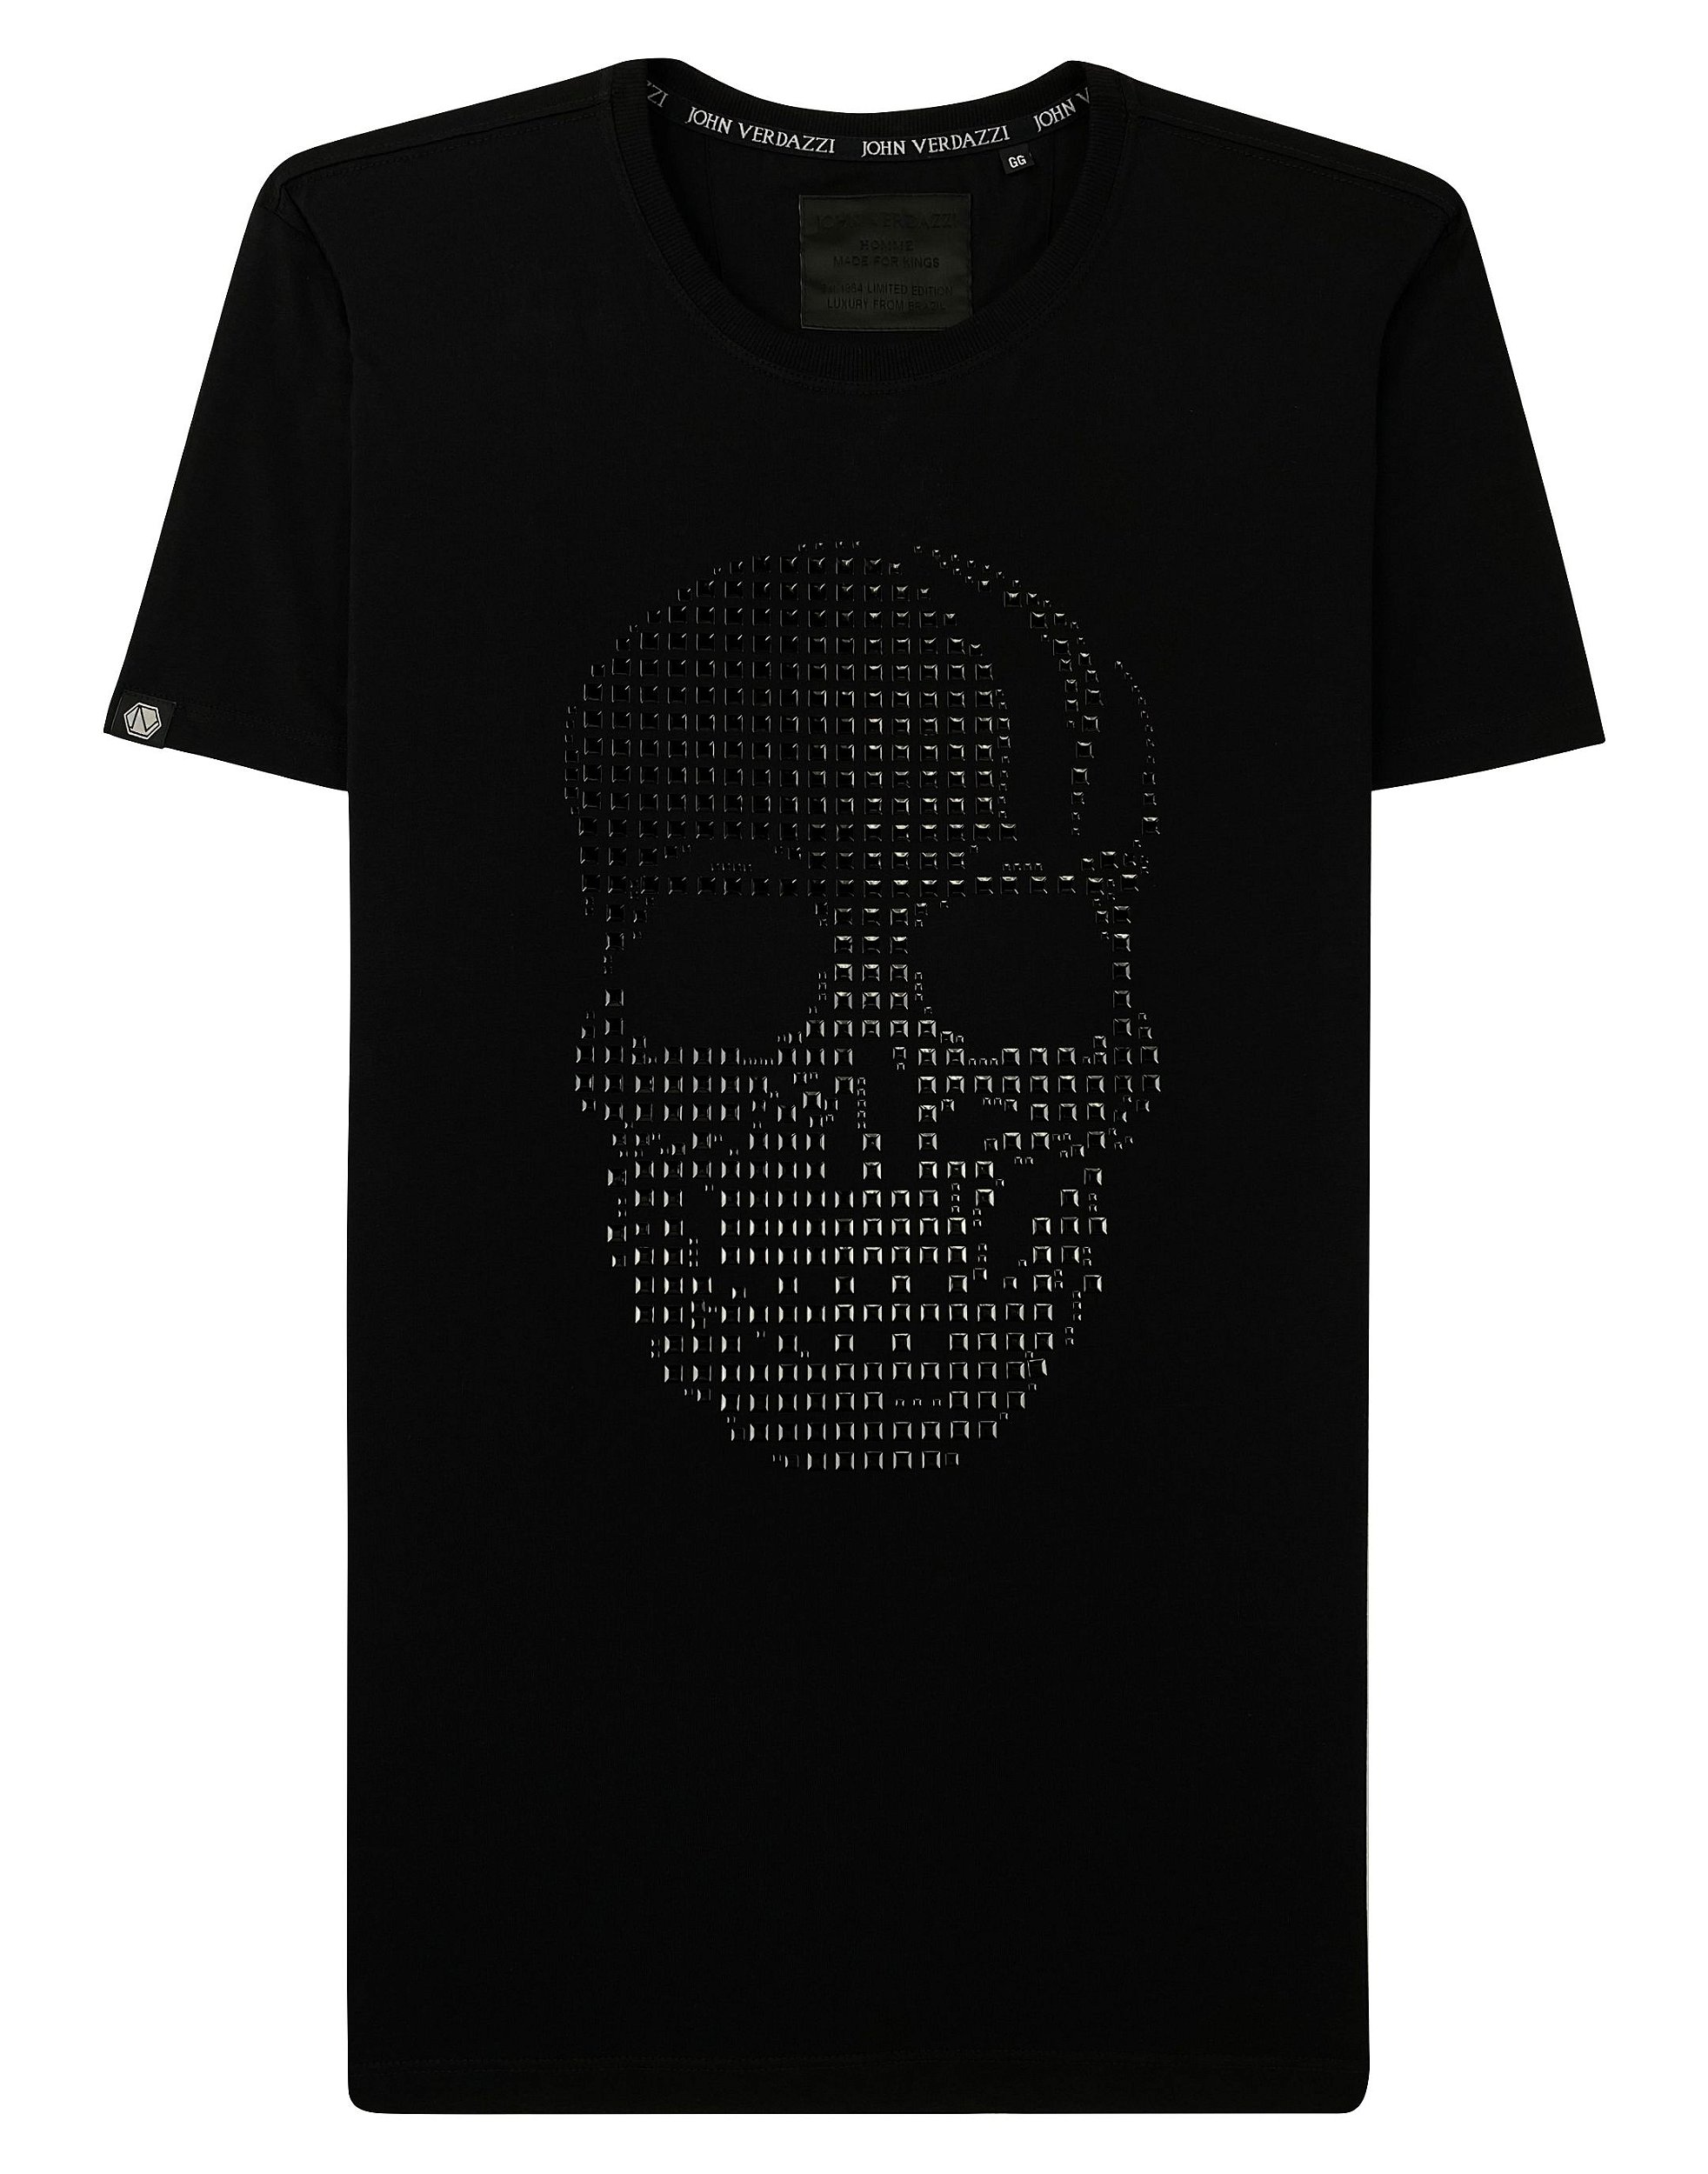 Camiseta masculina premium preta caveira preta - JOHN VERDAZZI: The  Ultimate Fashion Luxury E-Shop - Site Oficial | johnverdazzi.com.br